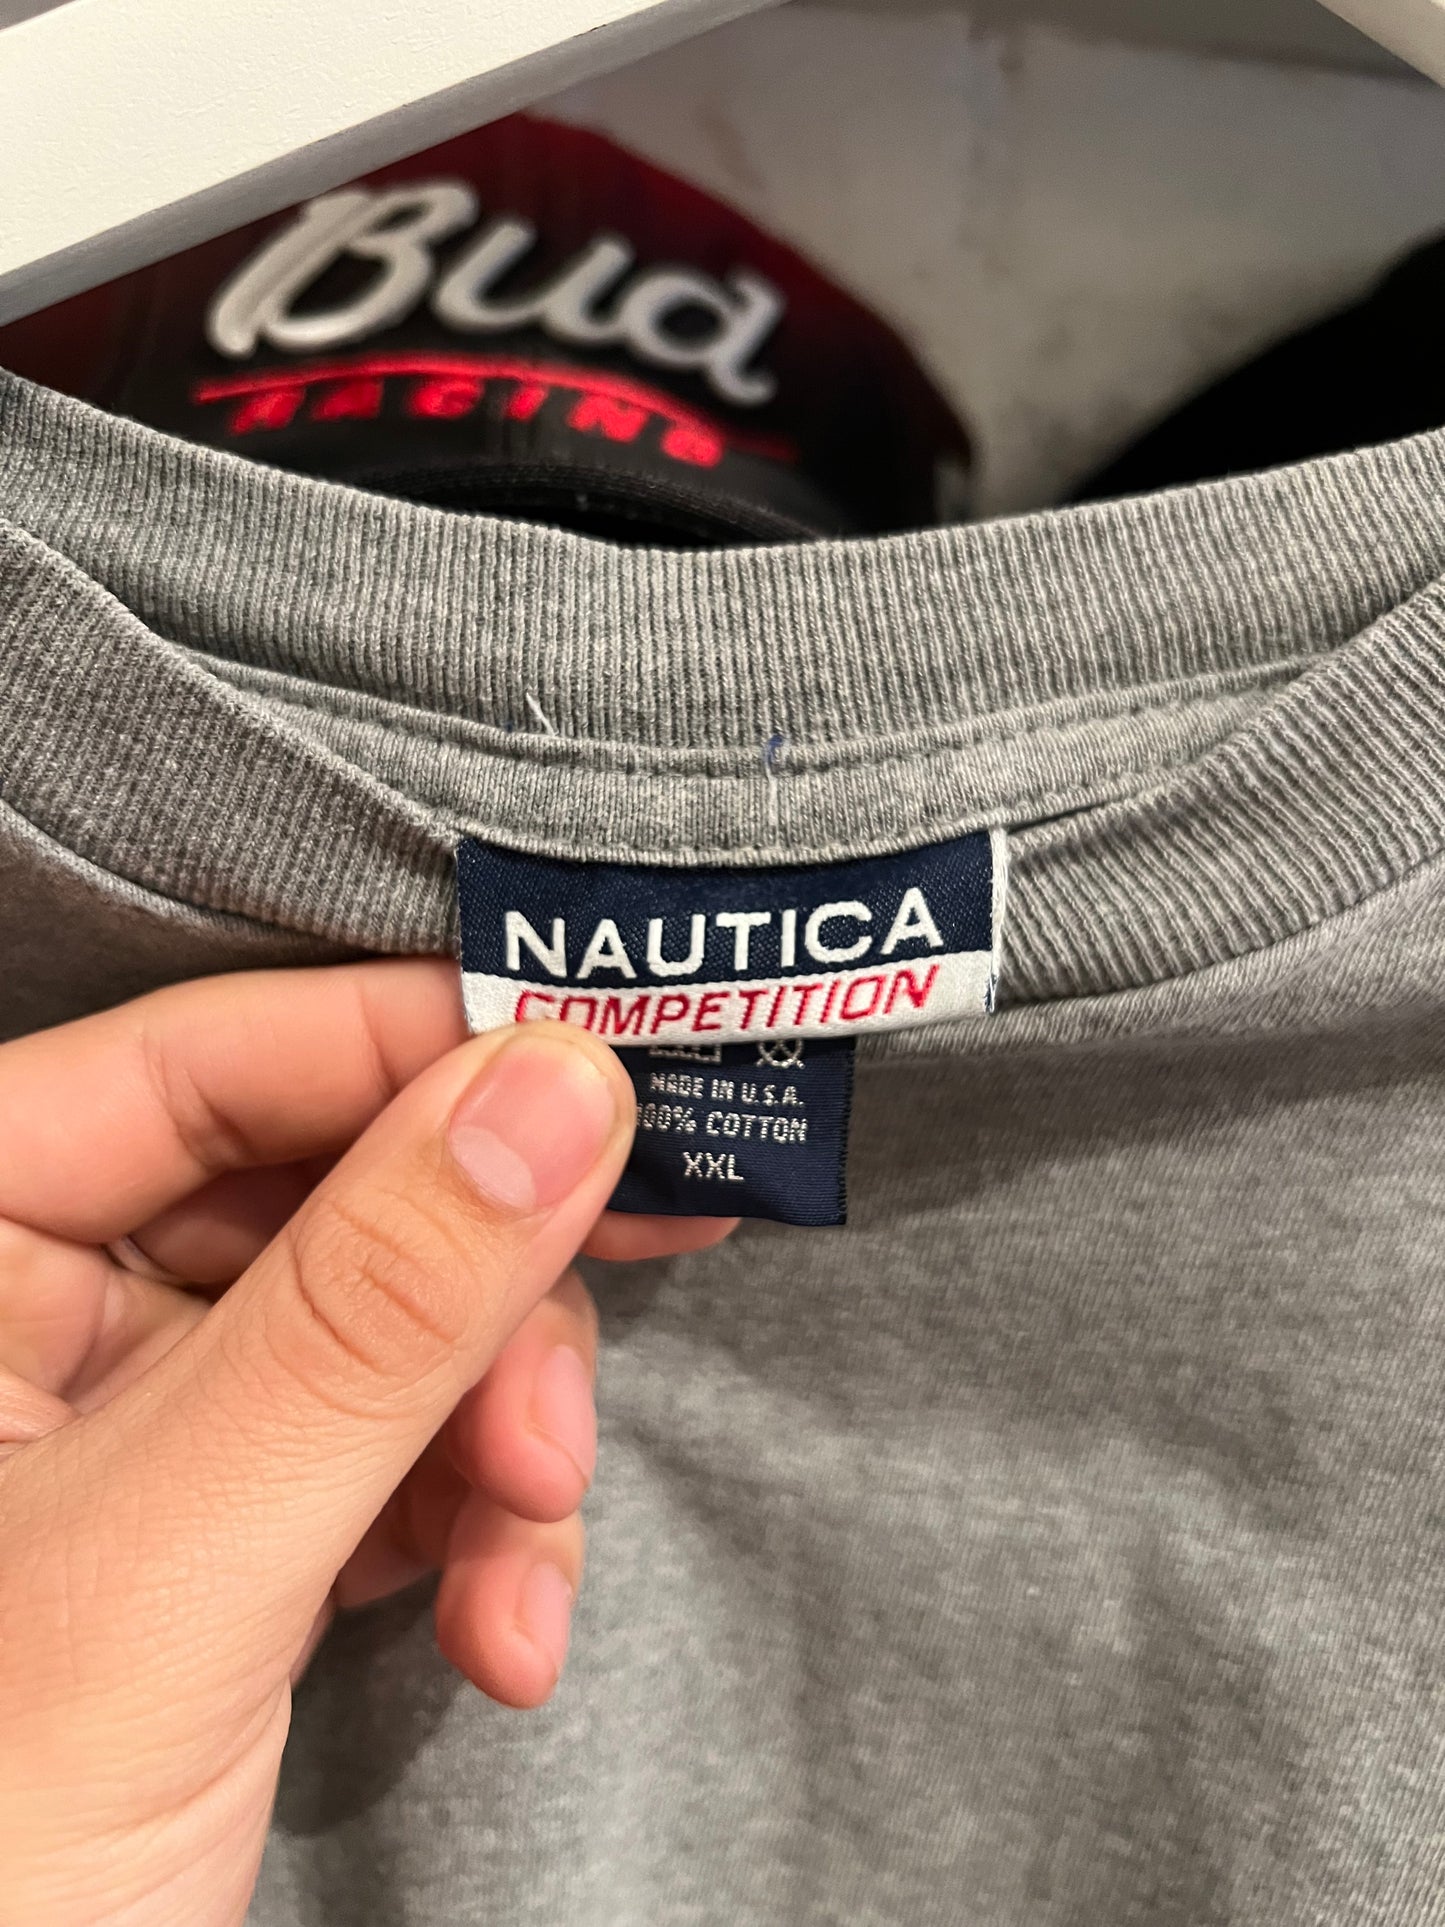 Nautica Competition T-shirt size 2XL